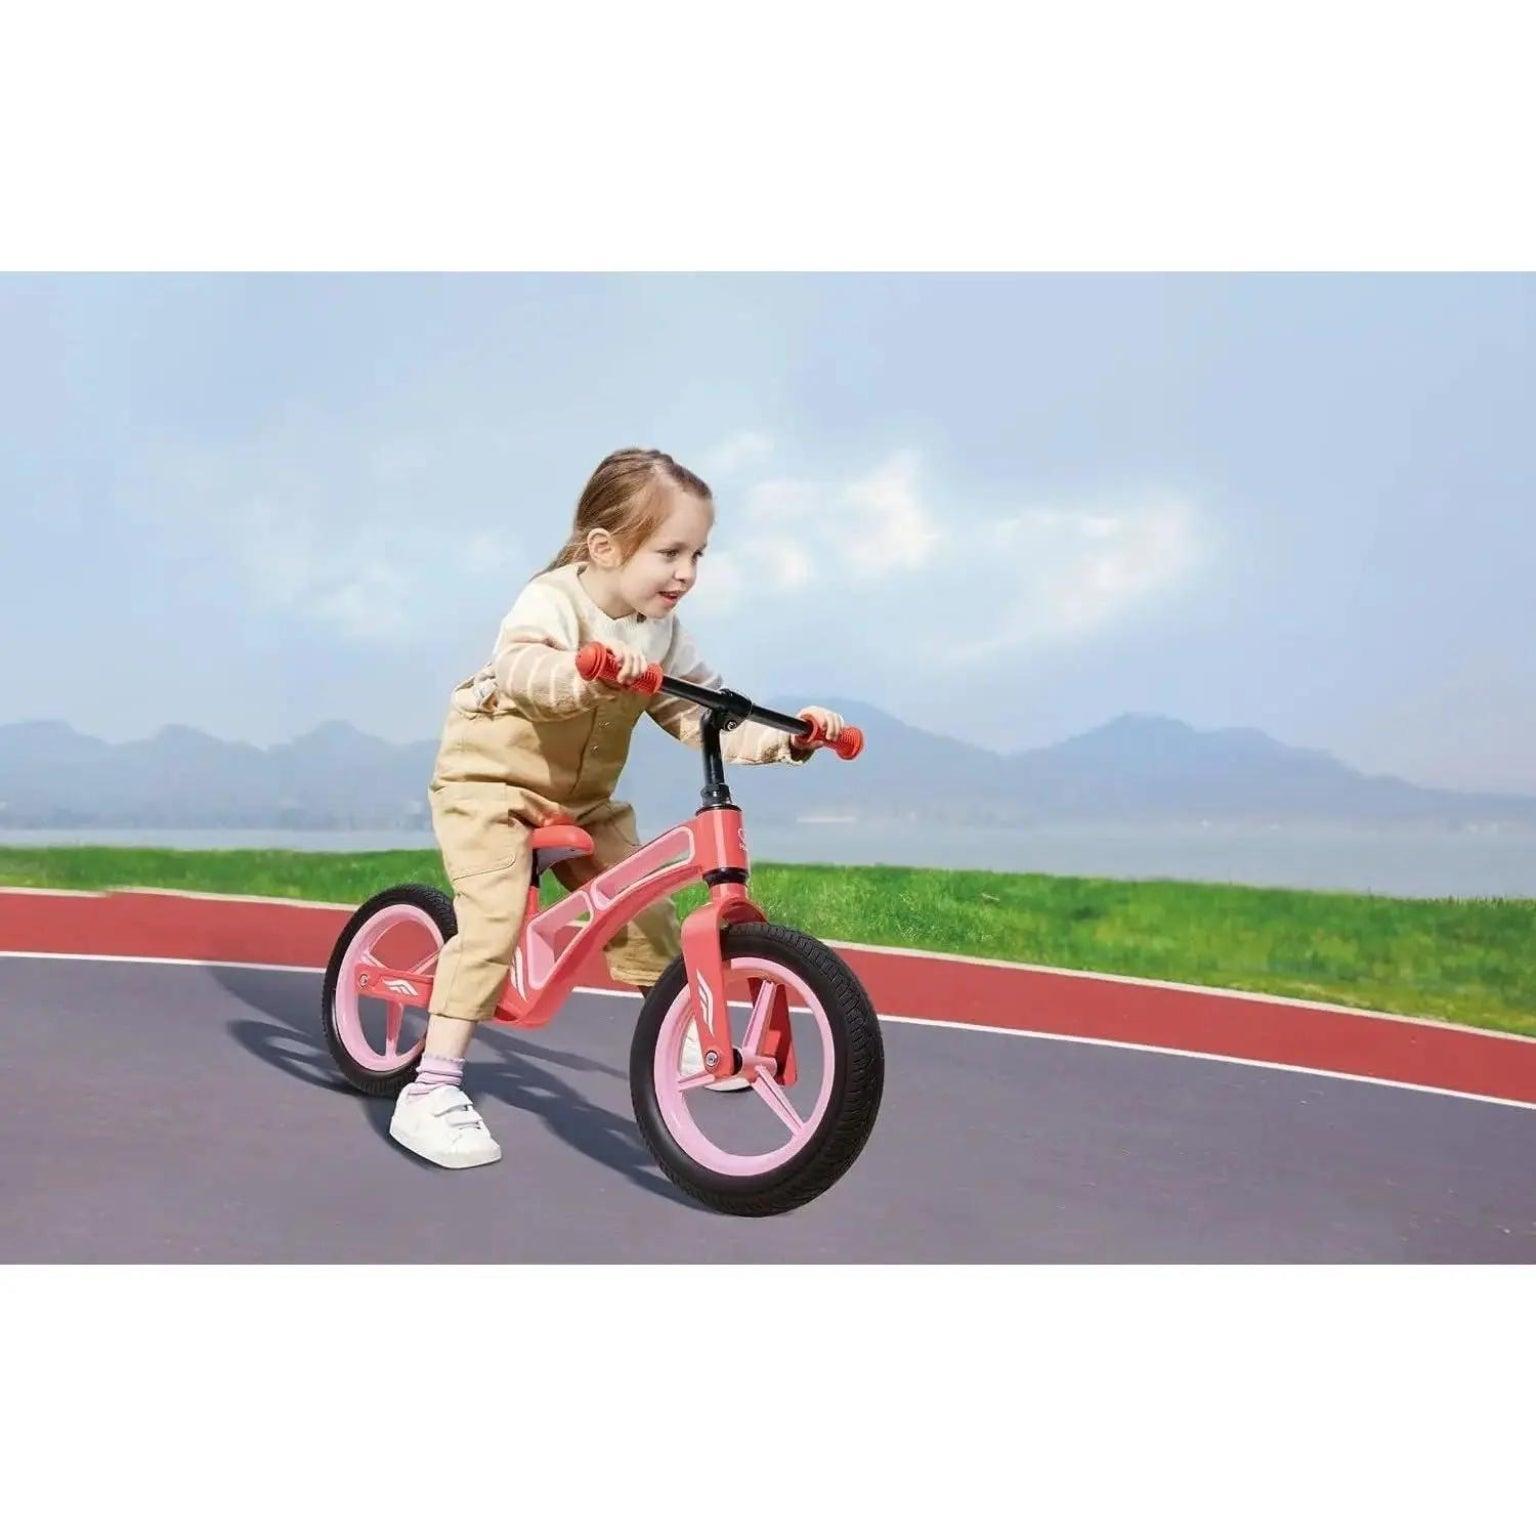 Bicicleta de Equilíbrio Rosa - Brincatoys